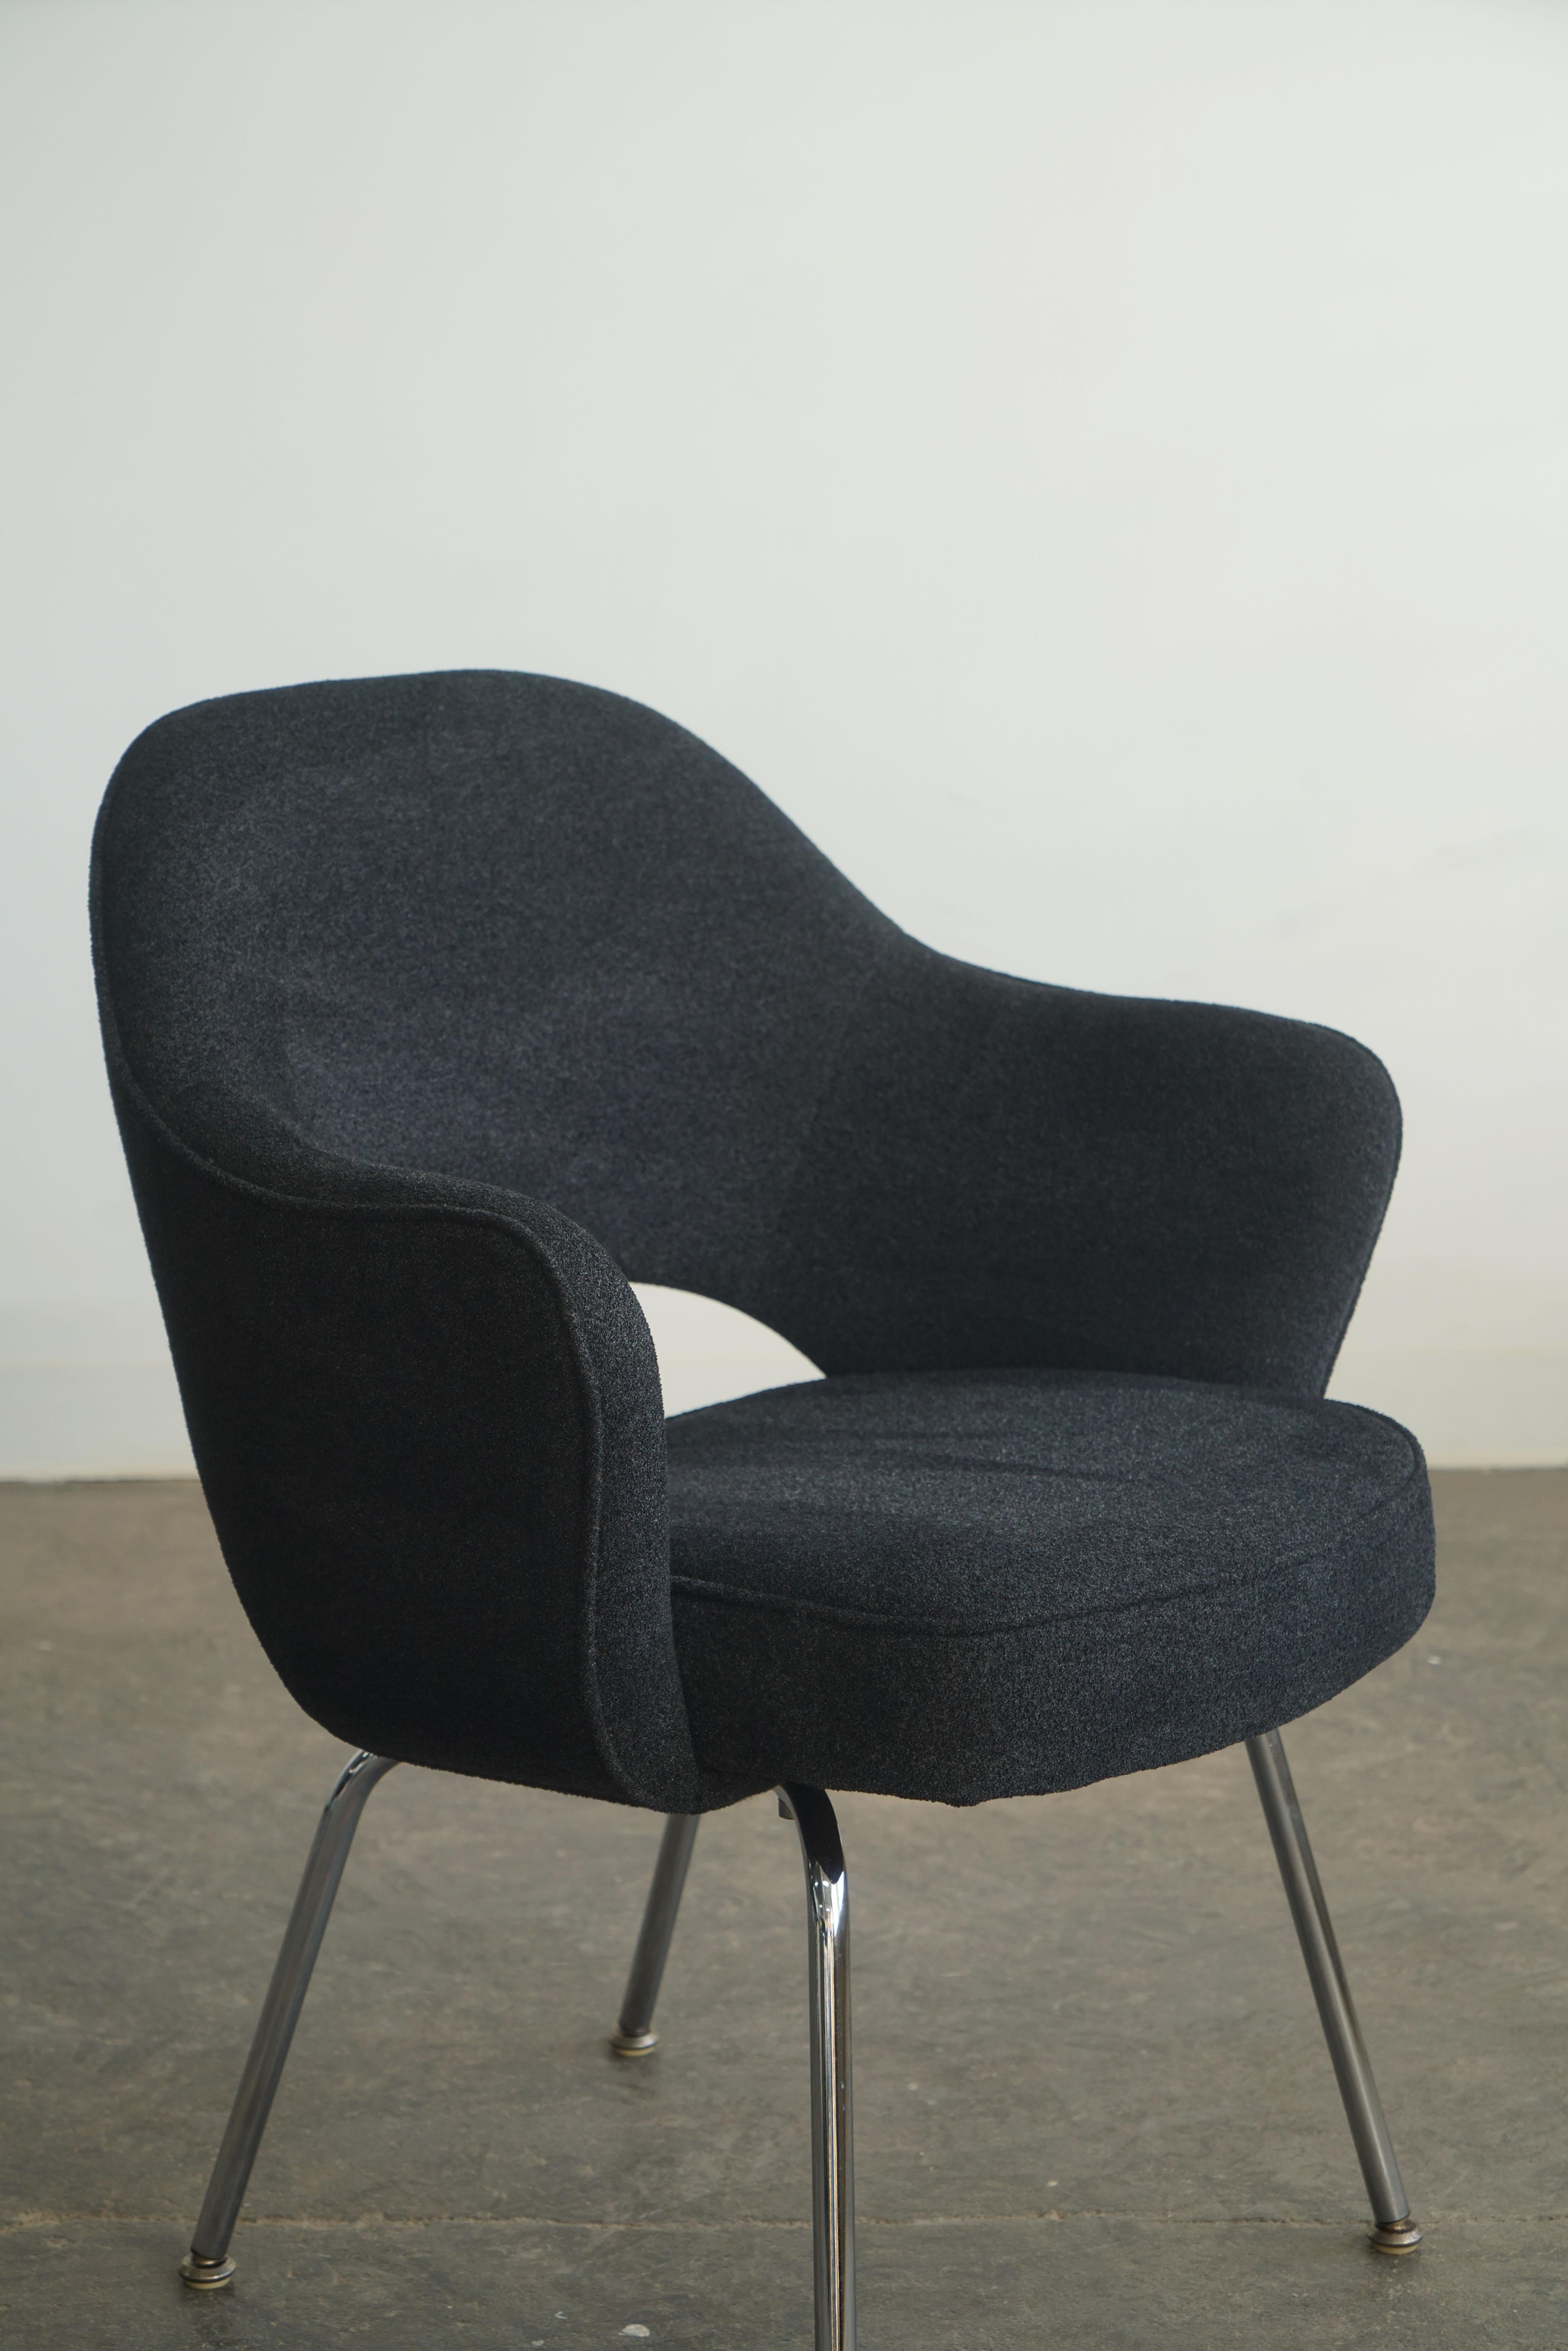 Late 20th Century Pair of Knoll Eero Saarinen Executive Chairs, Armchair version black upholstery